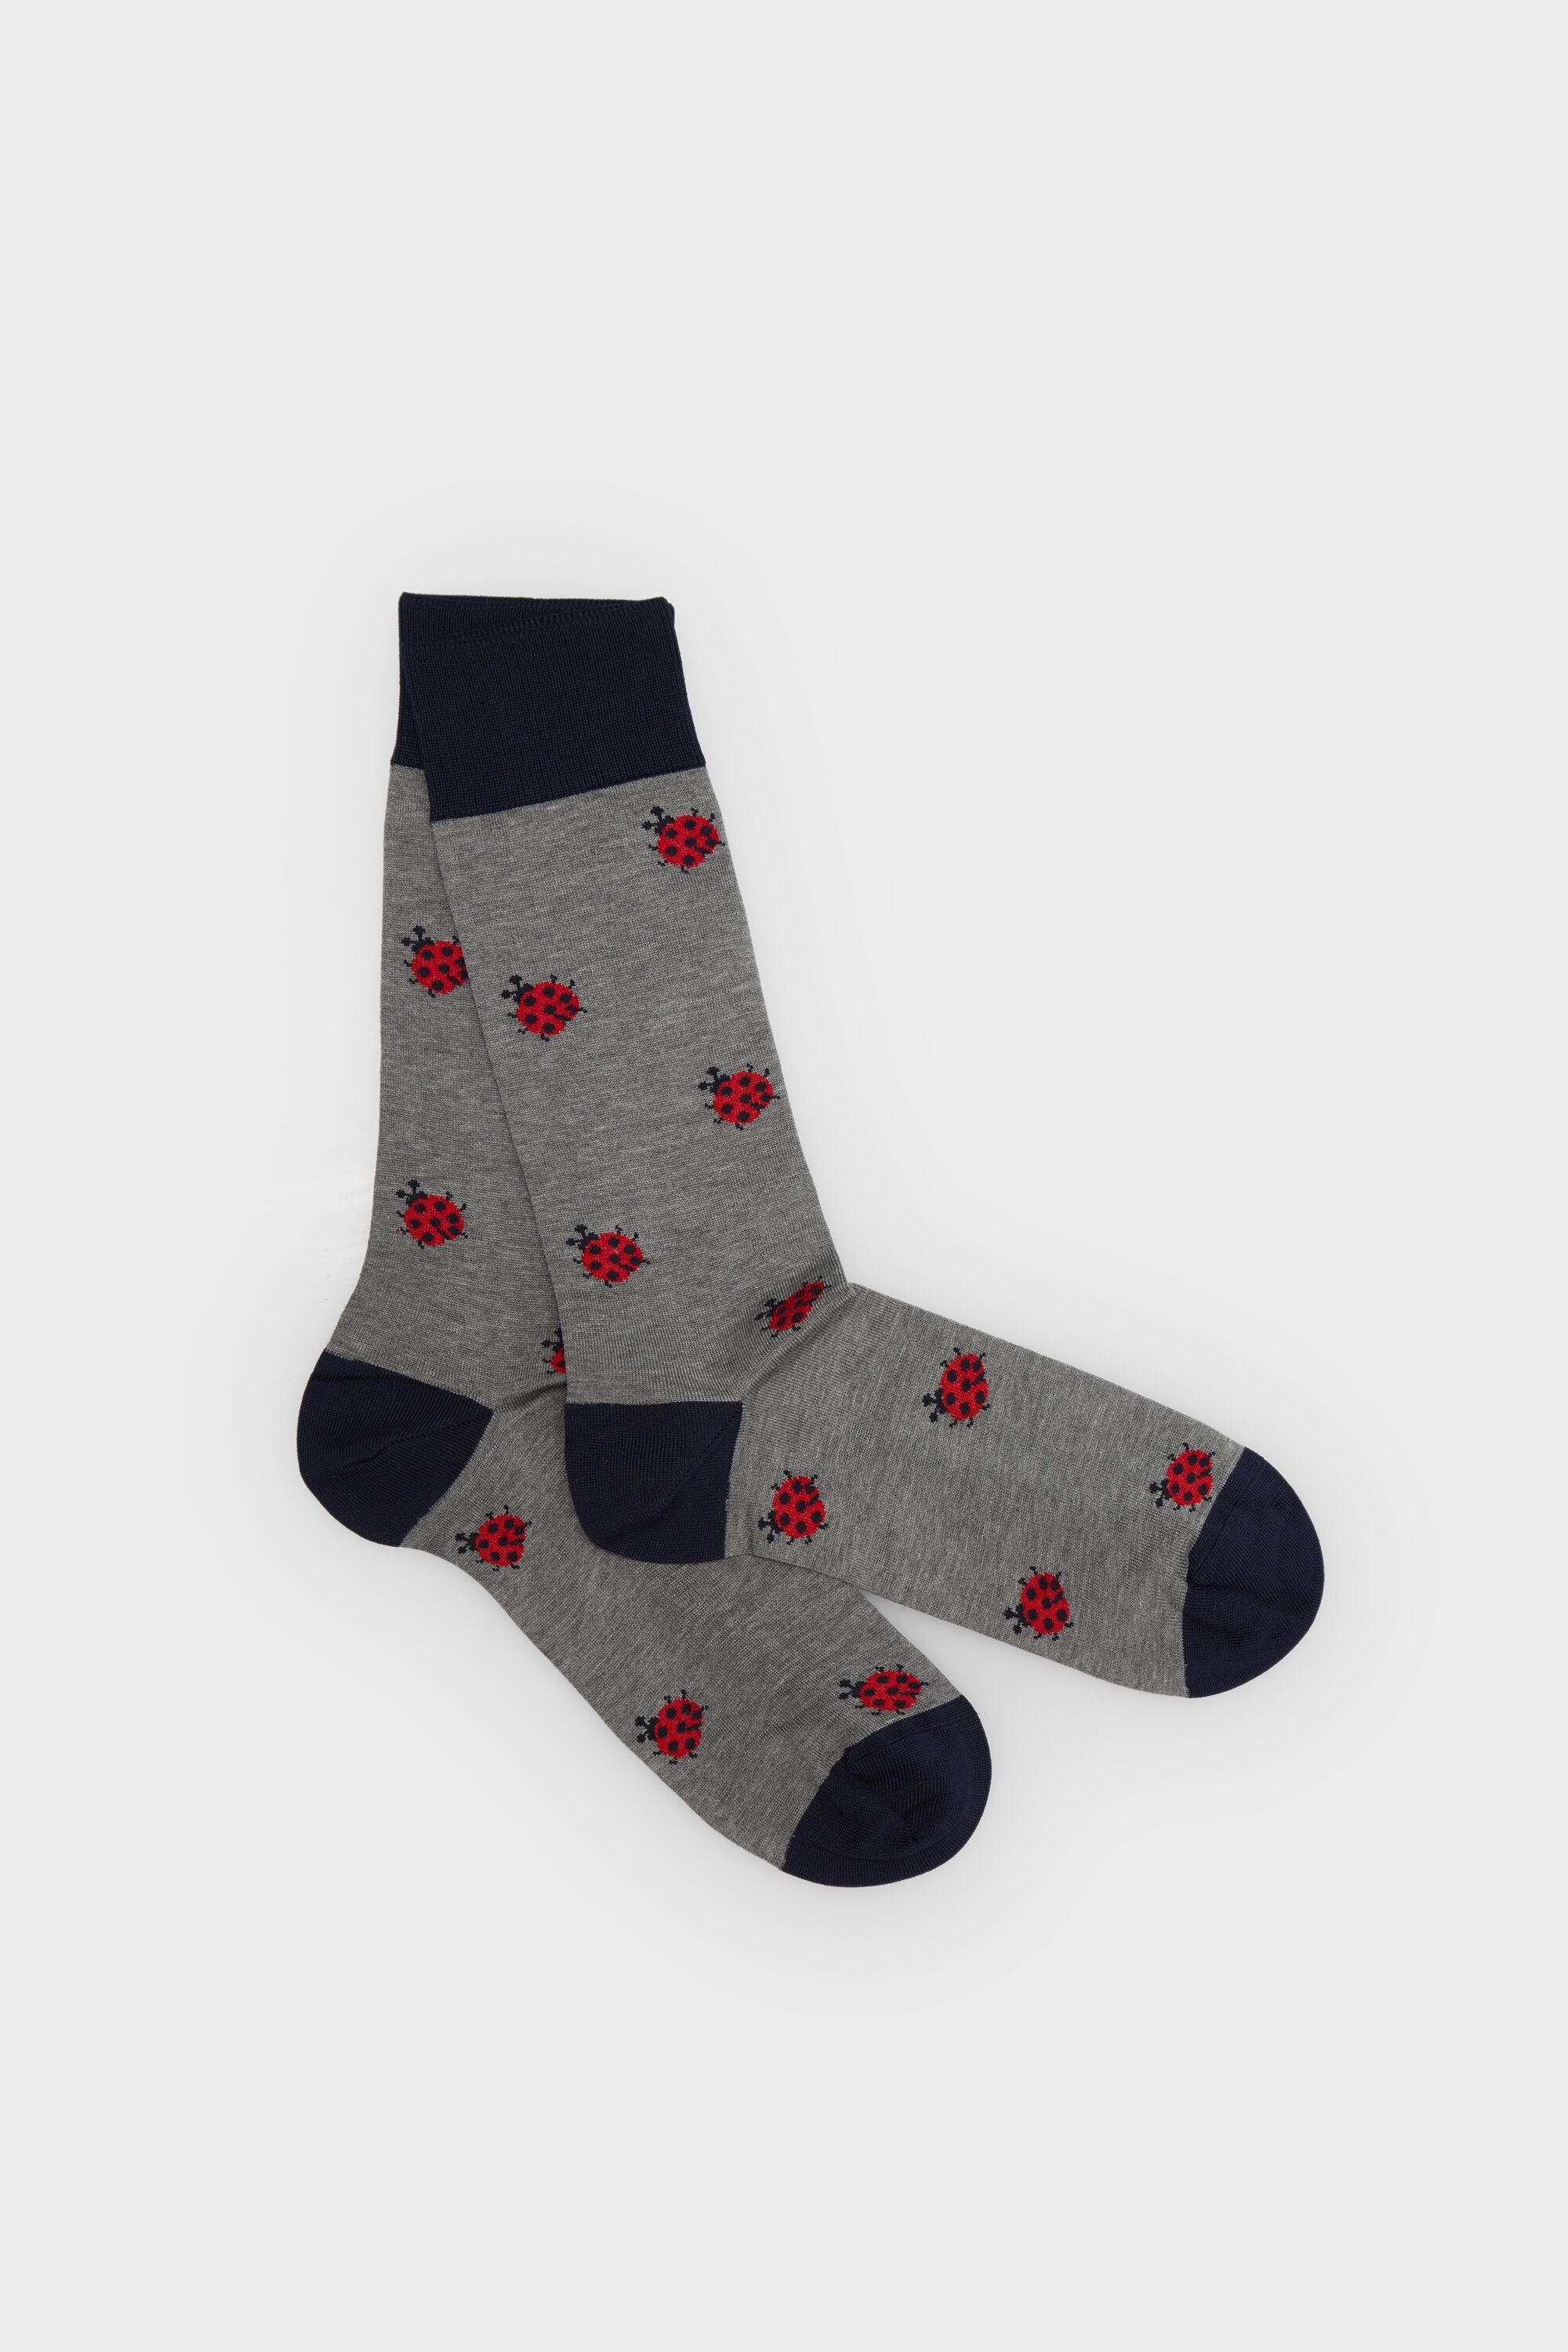 Catarinas socks